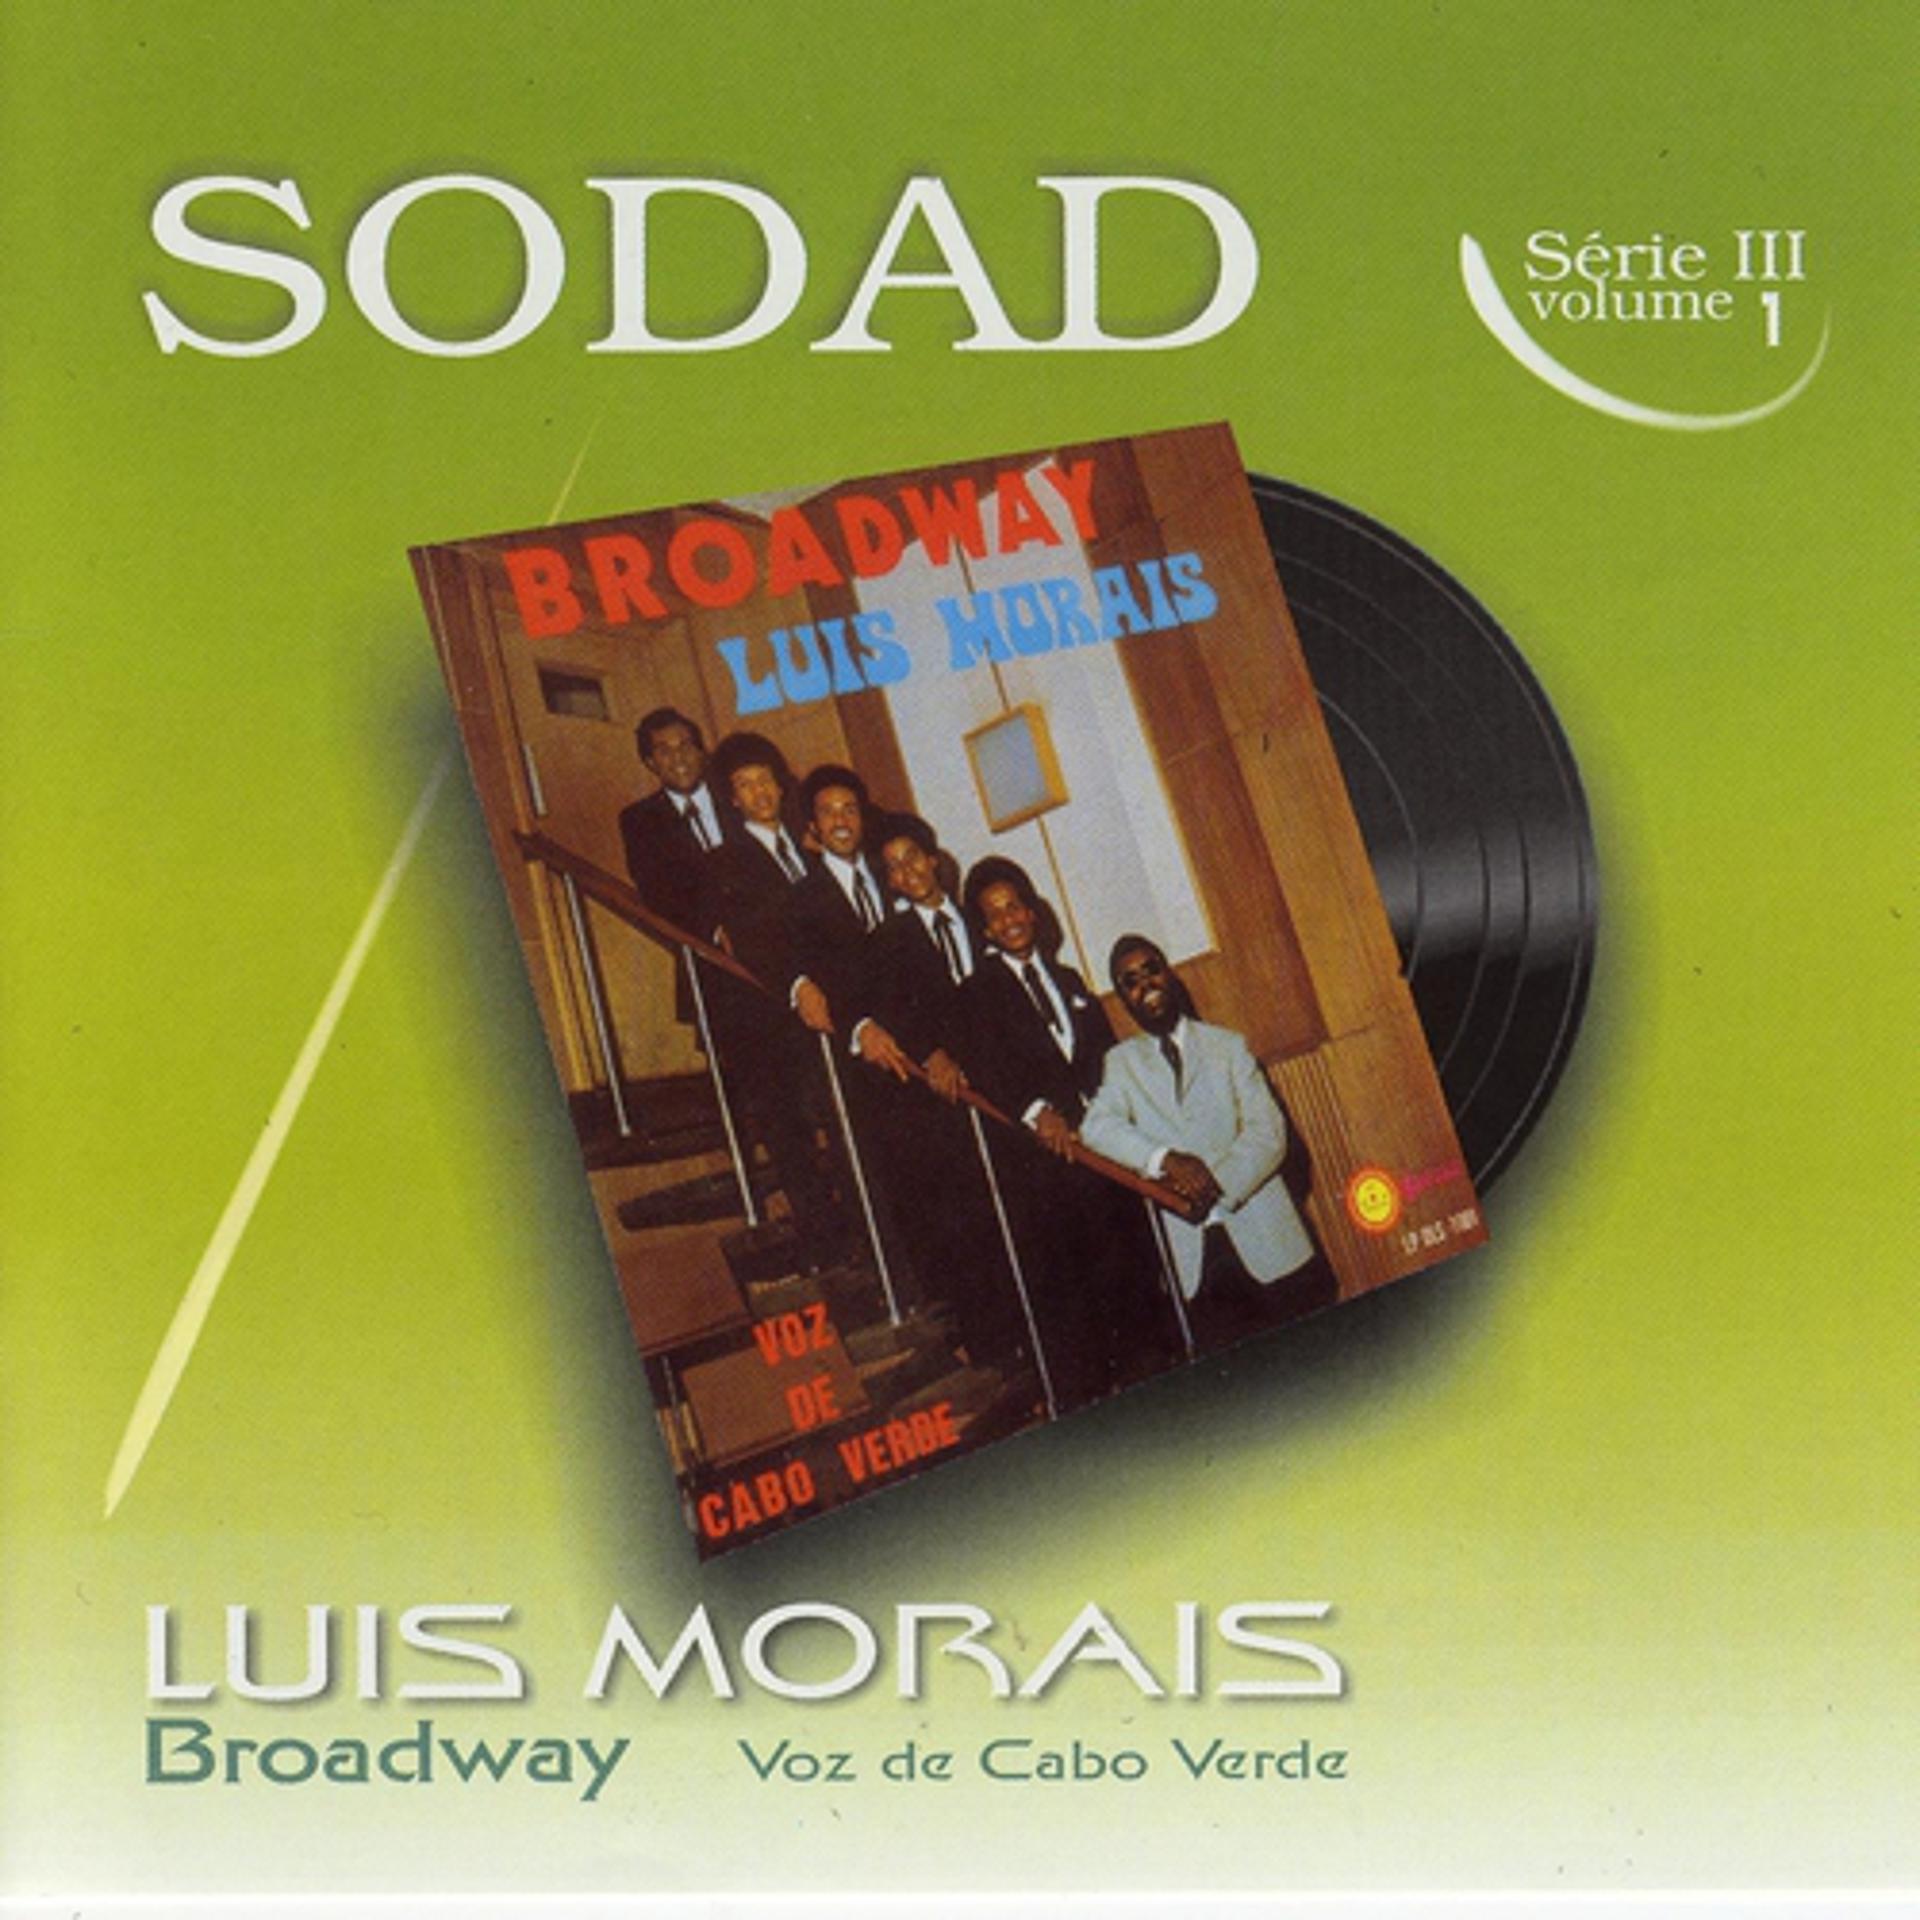 Постер альбома Sodad Broadway série 3, vol. 1